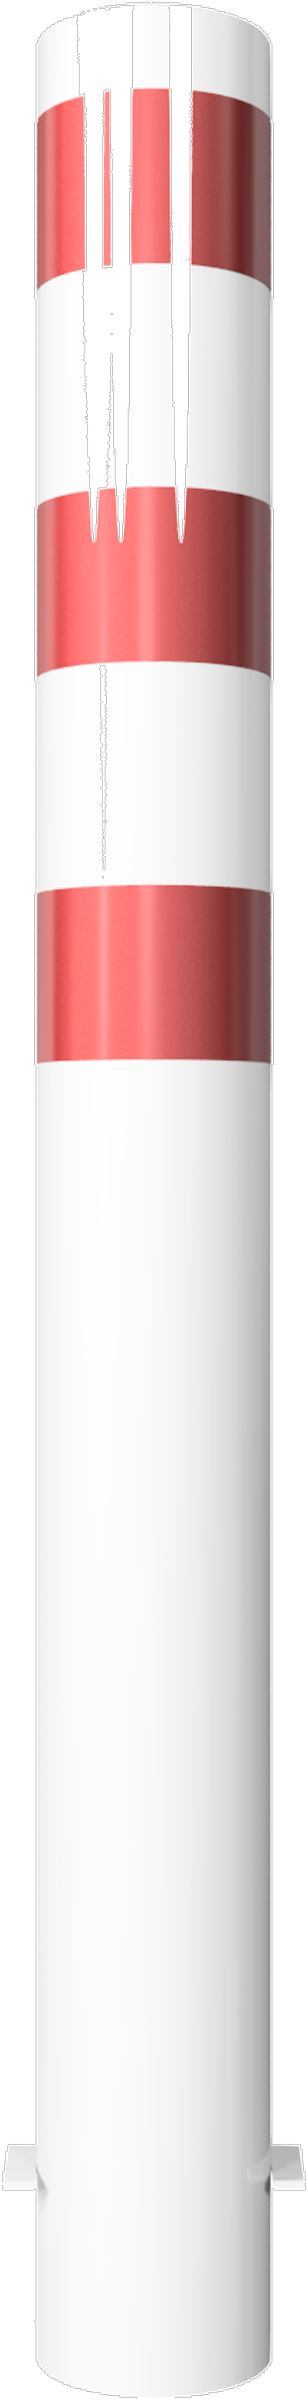 Schake Stahlrohrpoller OE Ø 152 mm weiß | rot - 1,50 m